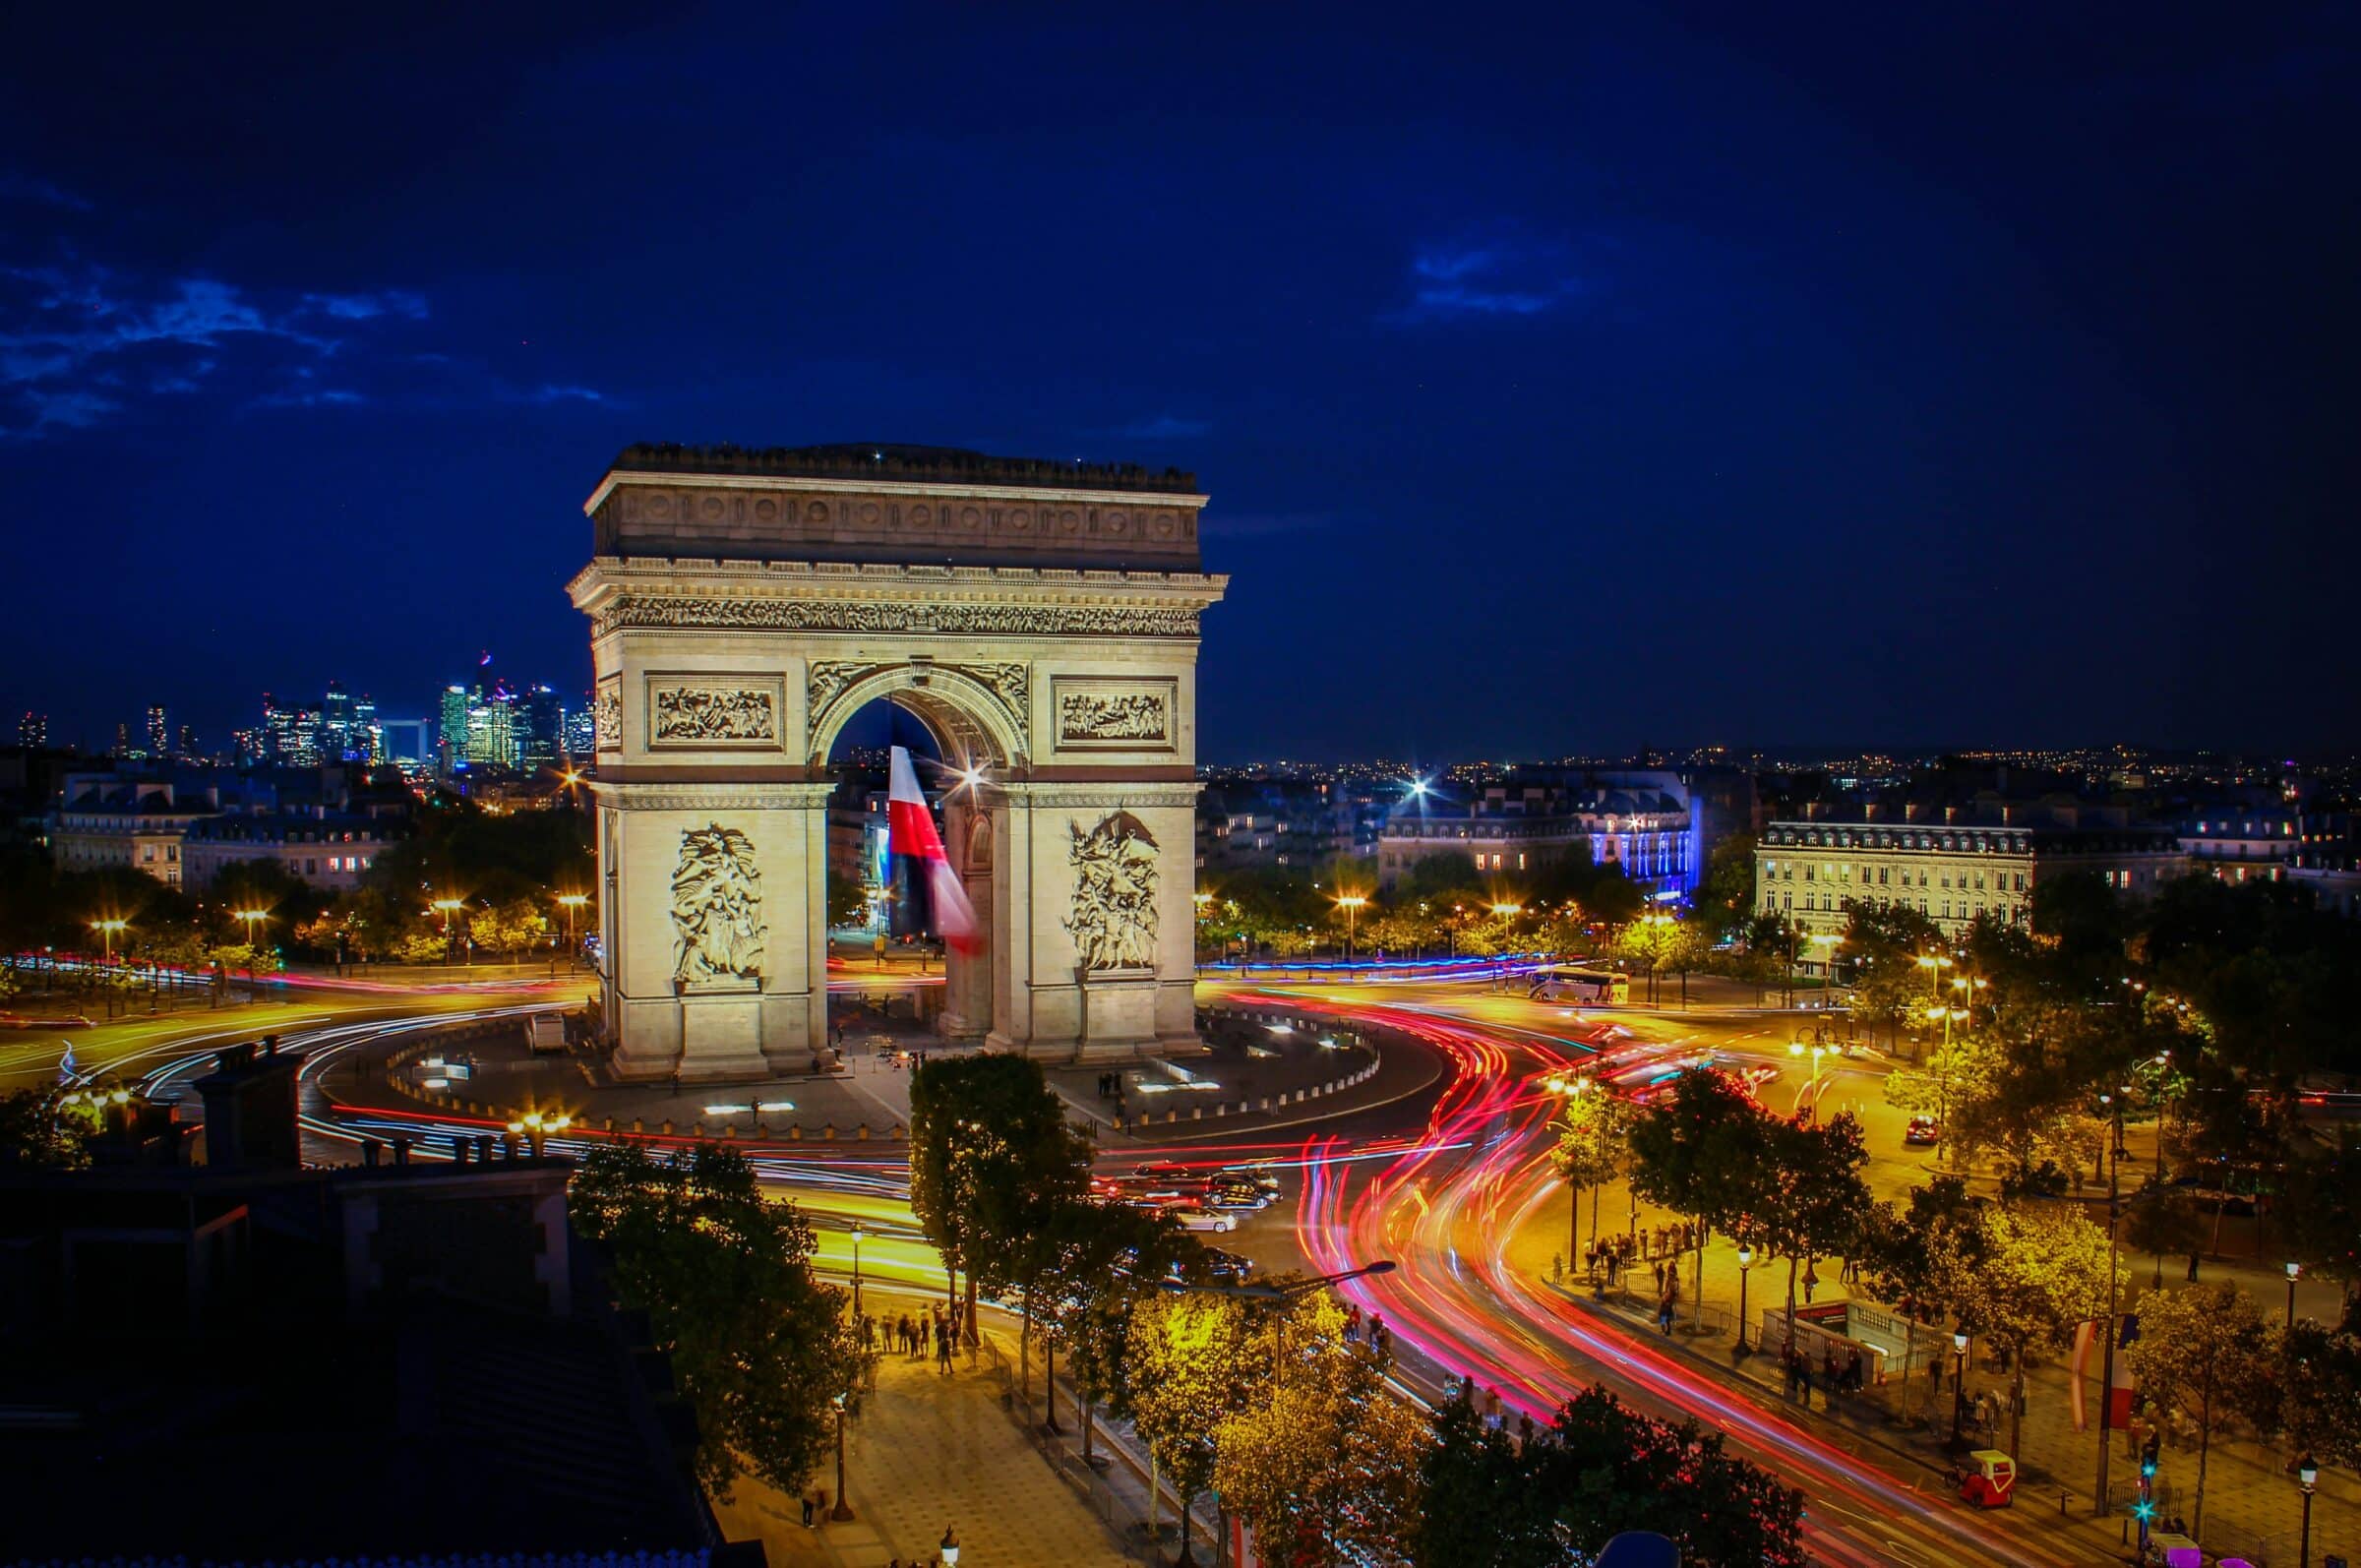 Long exposure shot of “Arc de Triomphe” in Paris